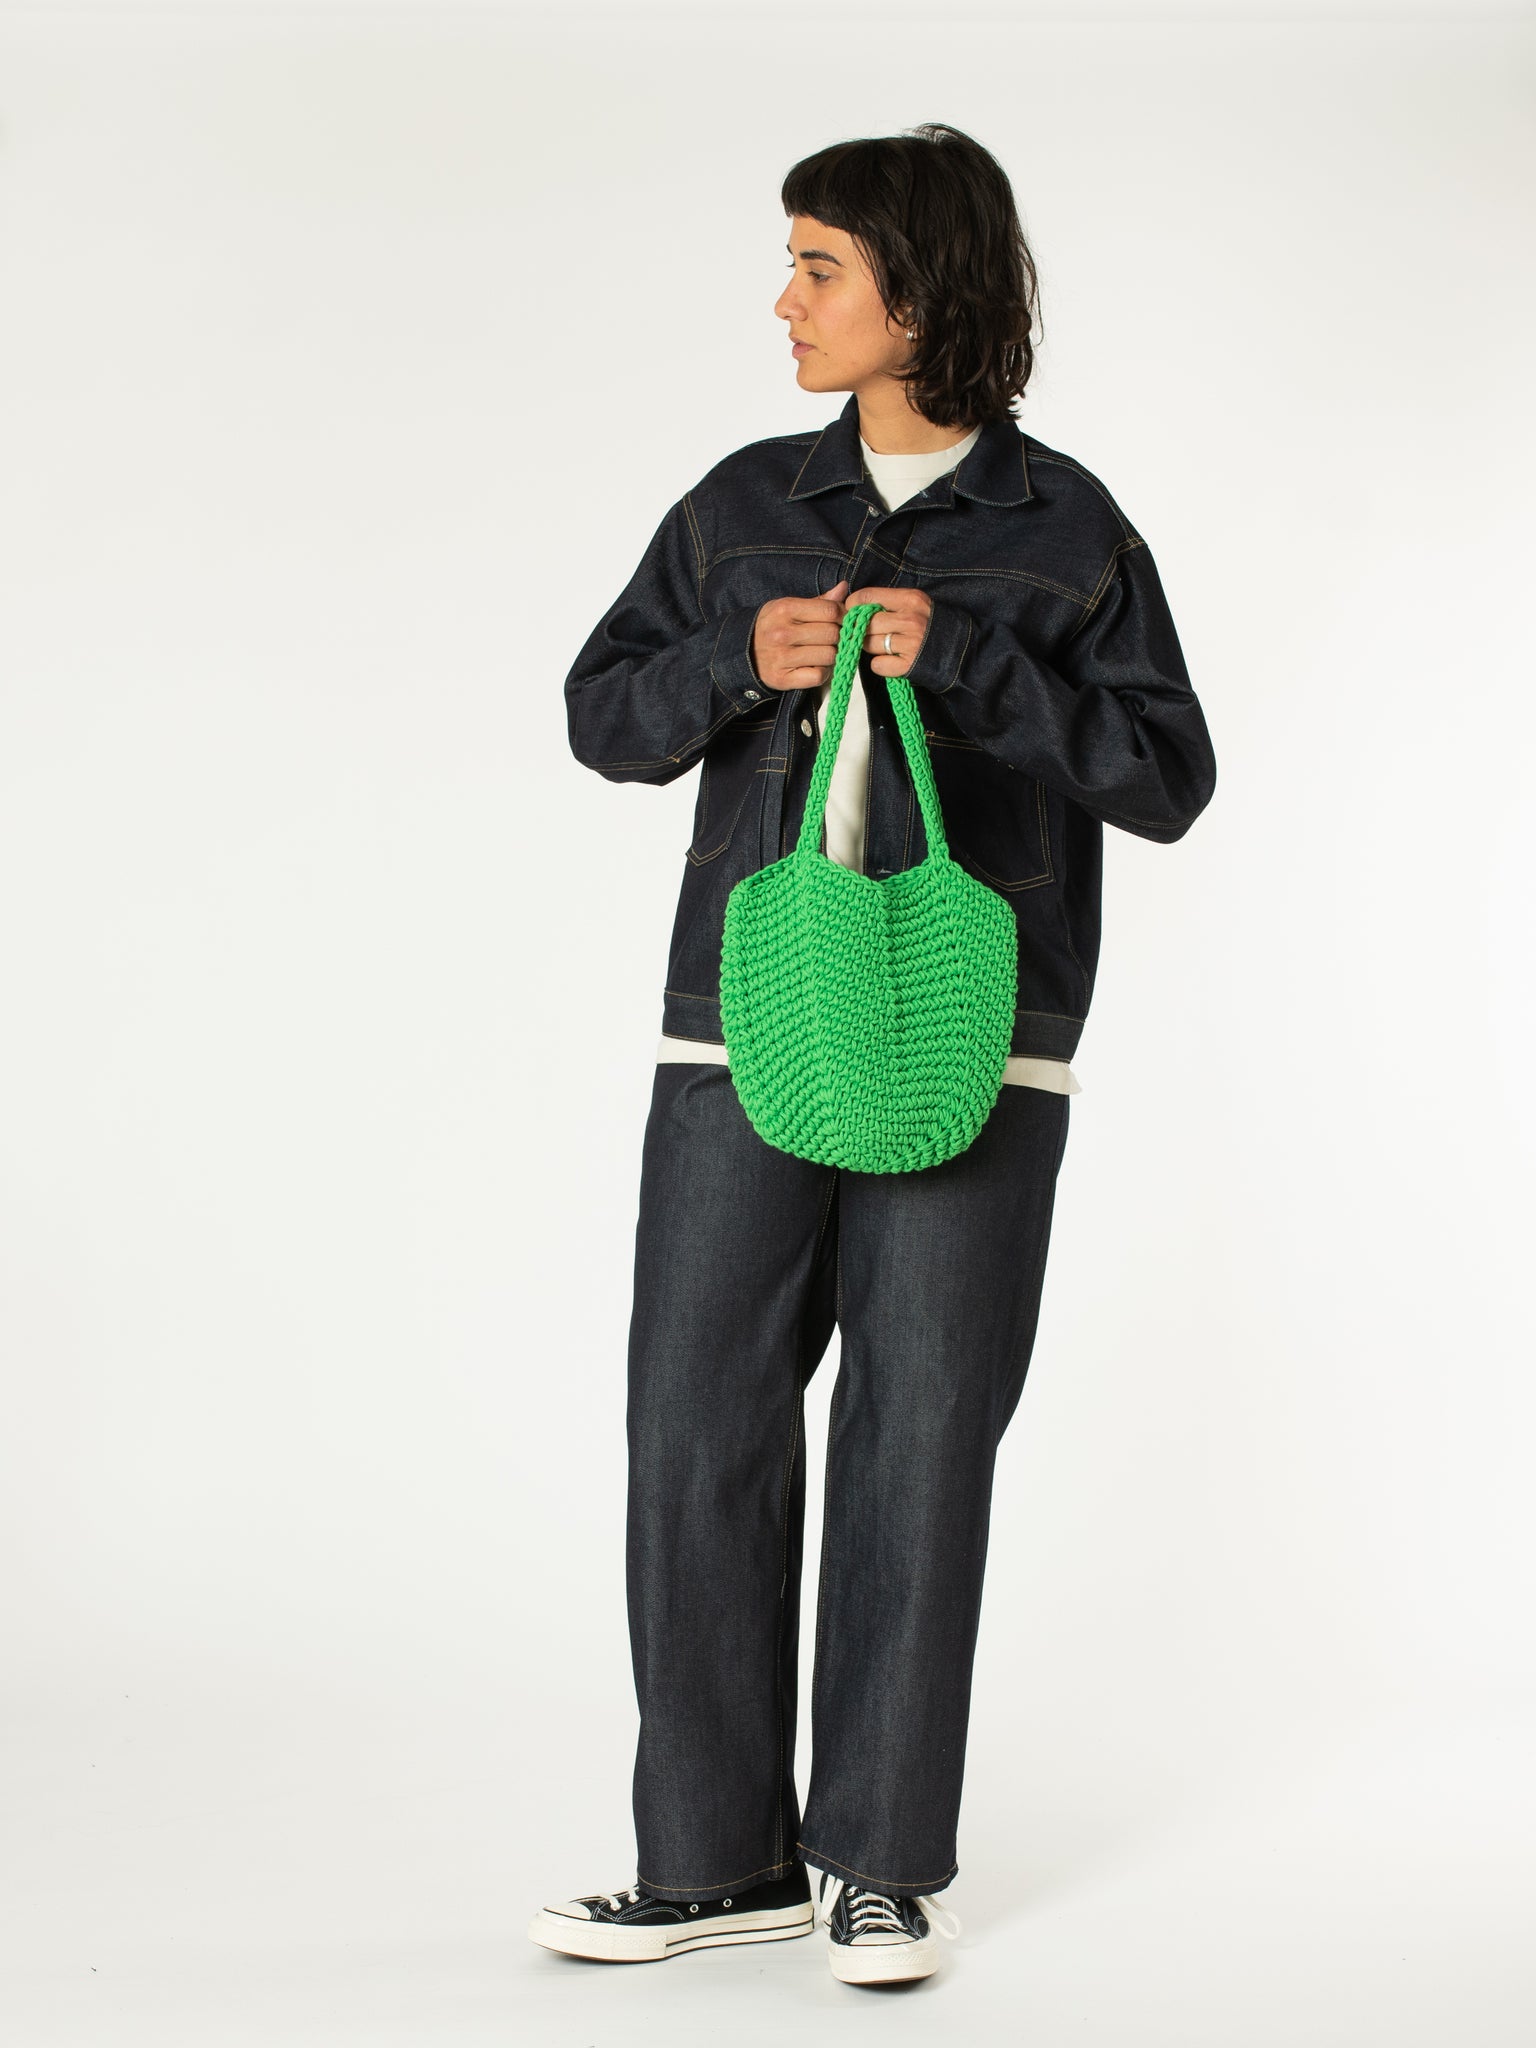 Crochet Small Bag